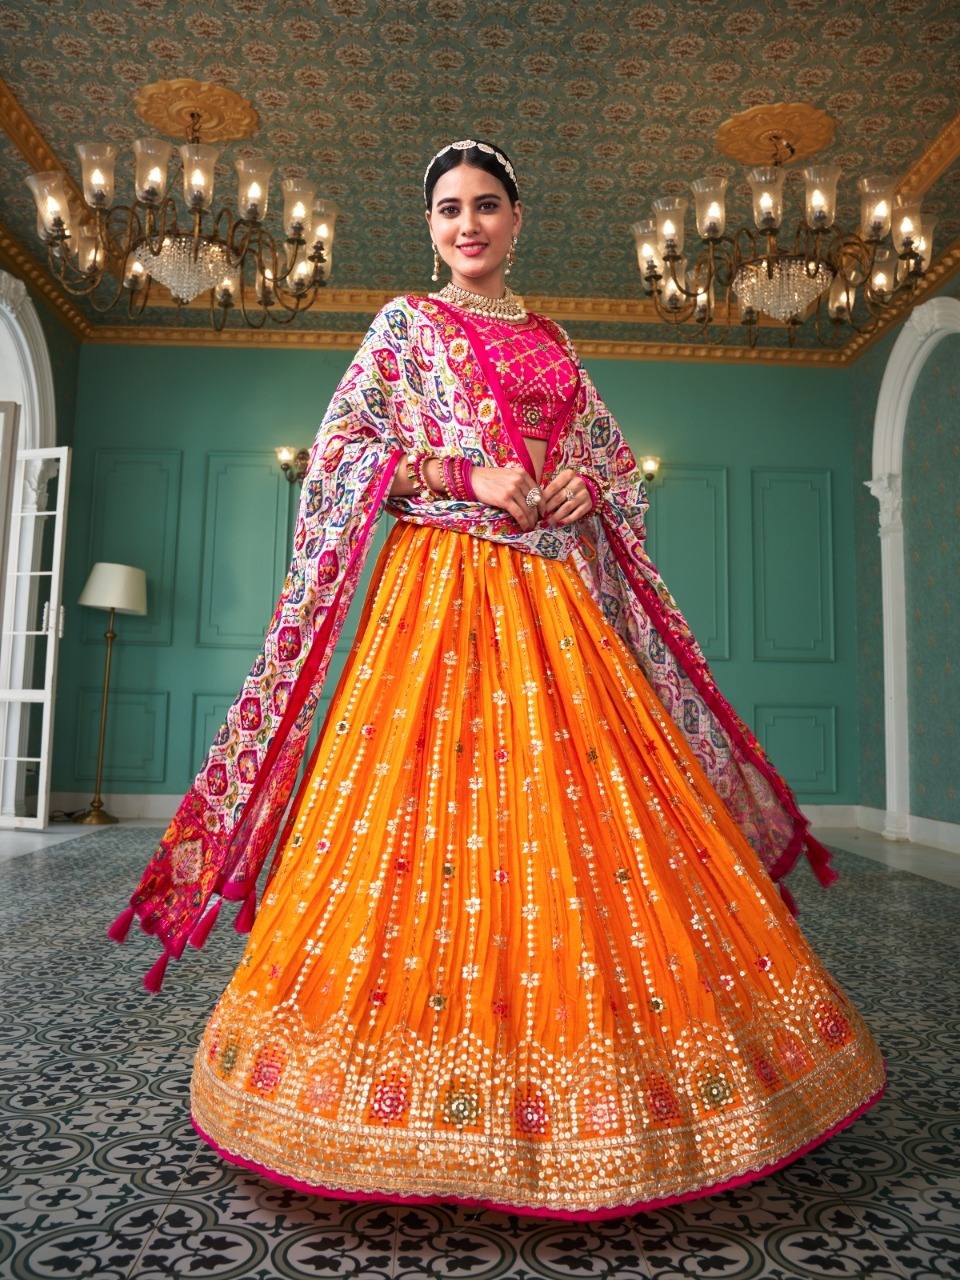 Golden Wedding Bridal Lehenga Choli new Design Beige Bollywood dress | eBay